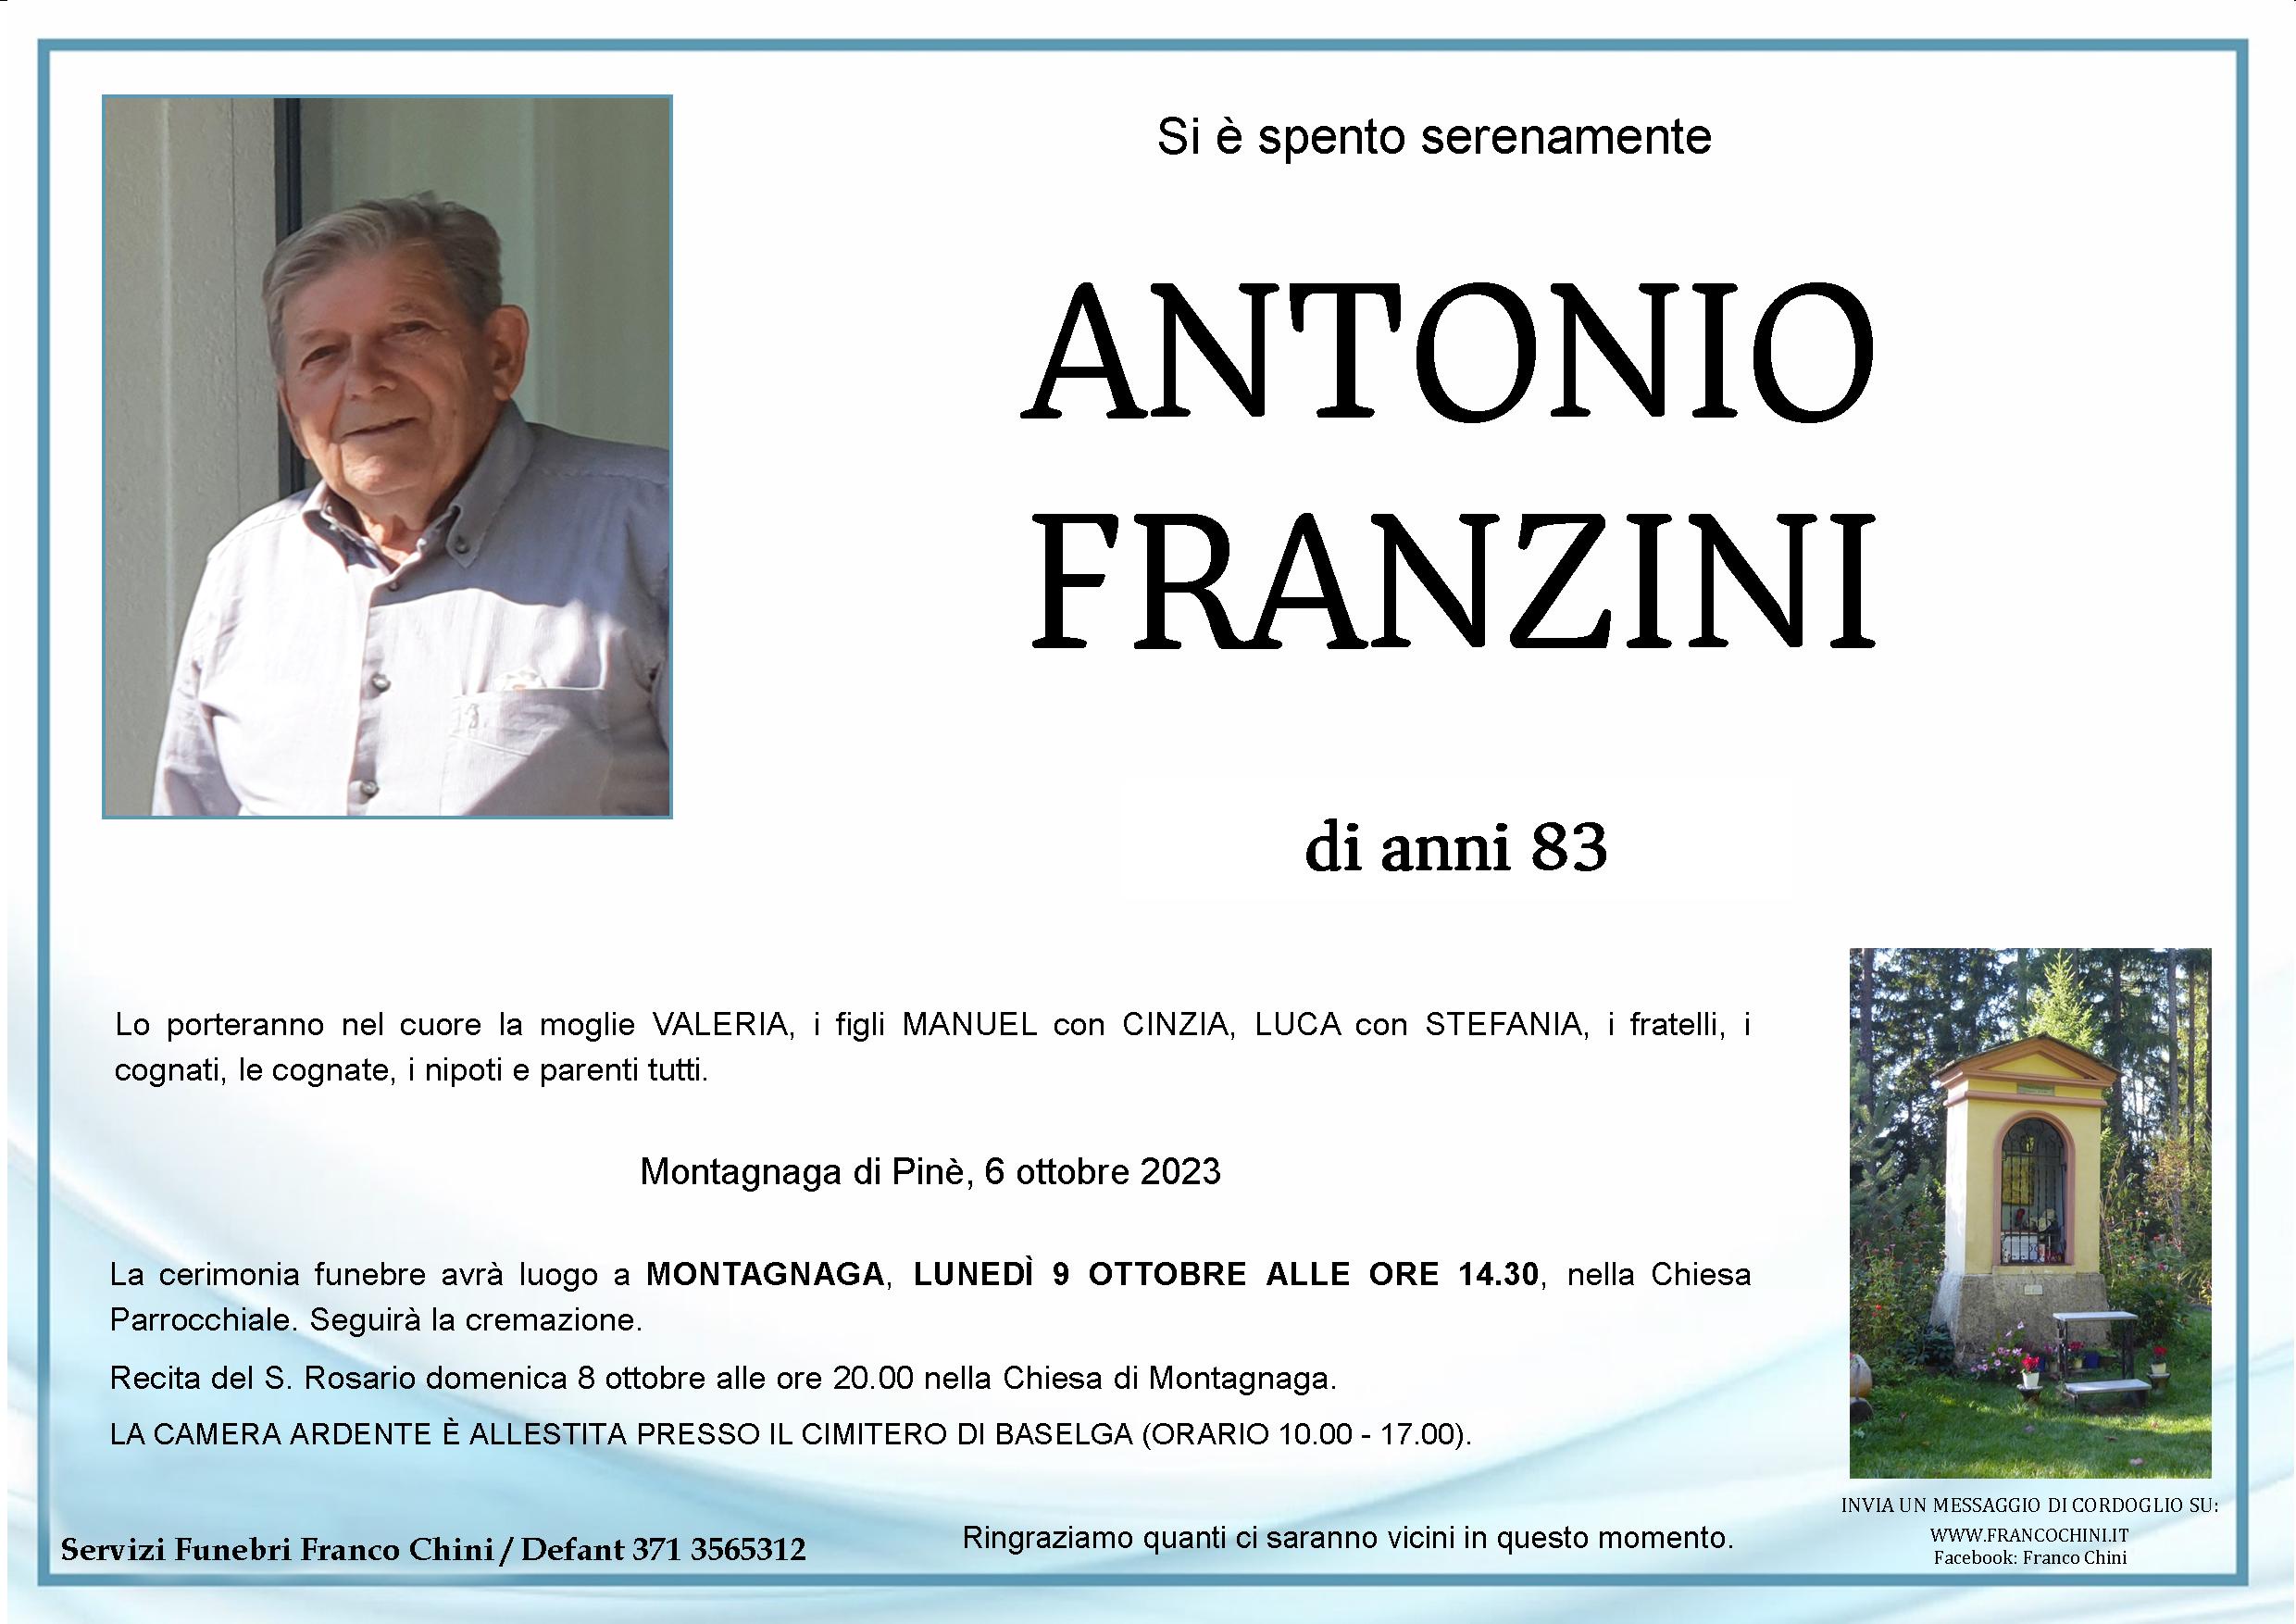 Antonio Franzini